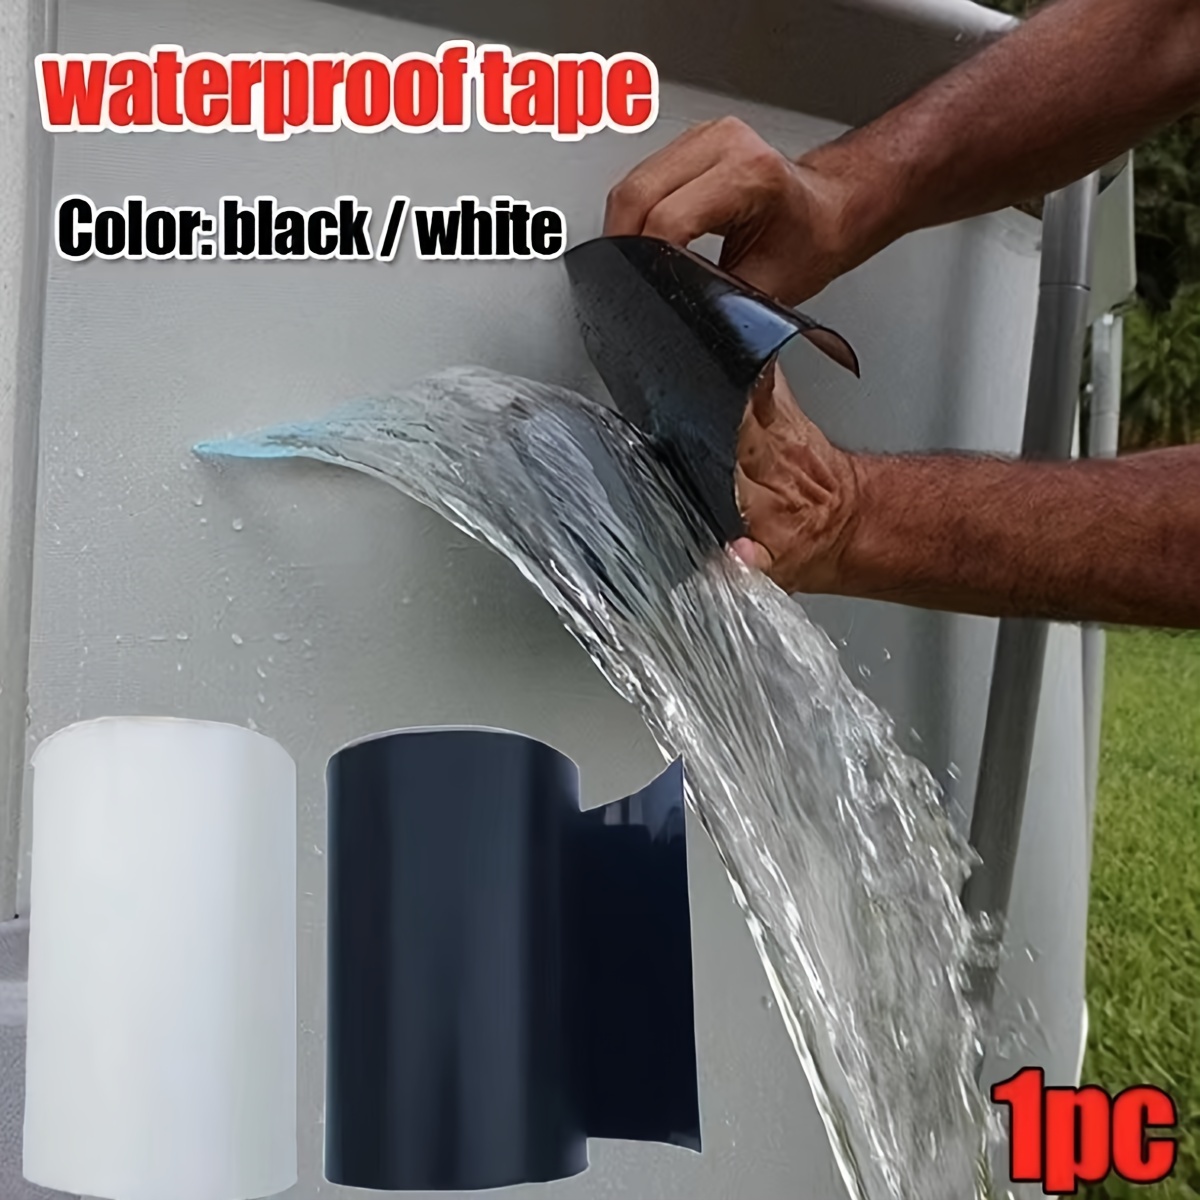 

1pc Waterproof Stop Leak Tape, Leak-proof Sticker, Pipe Repair Leak Tape